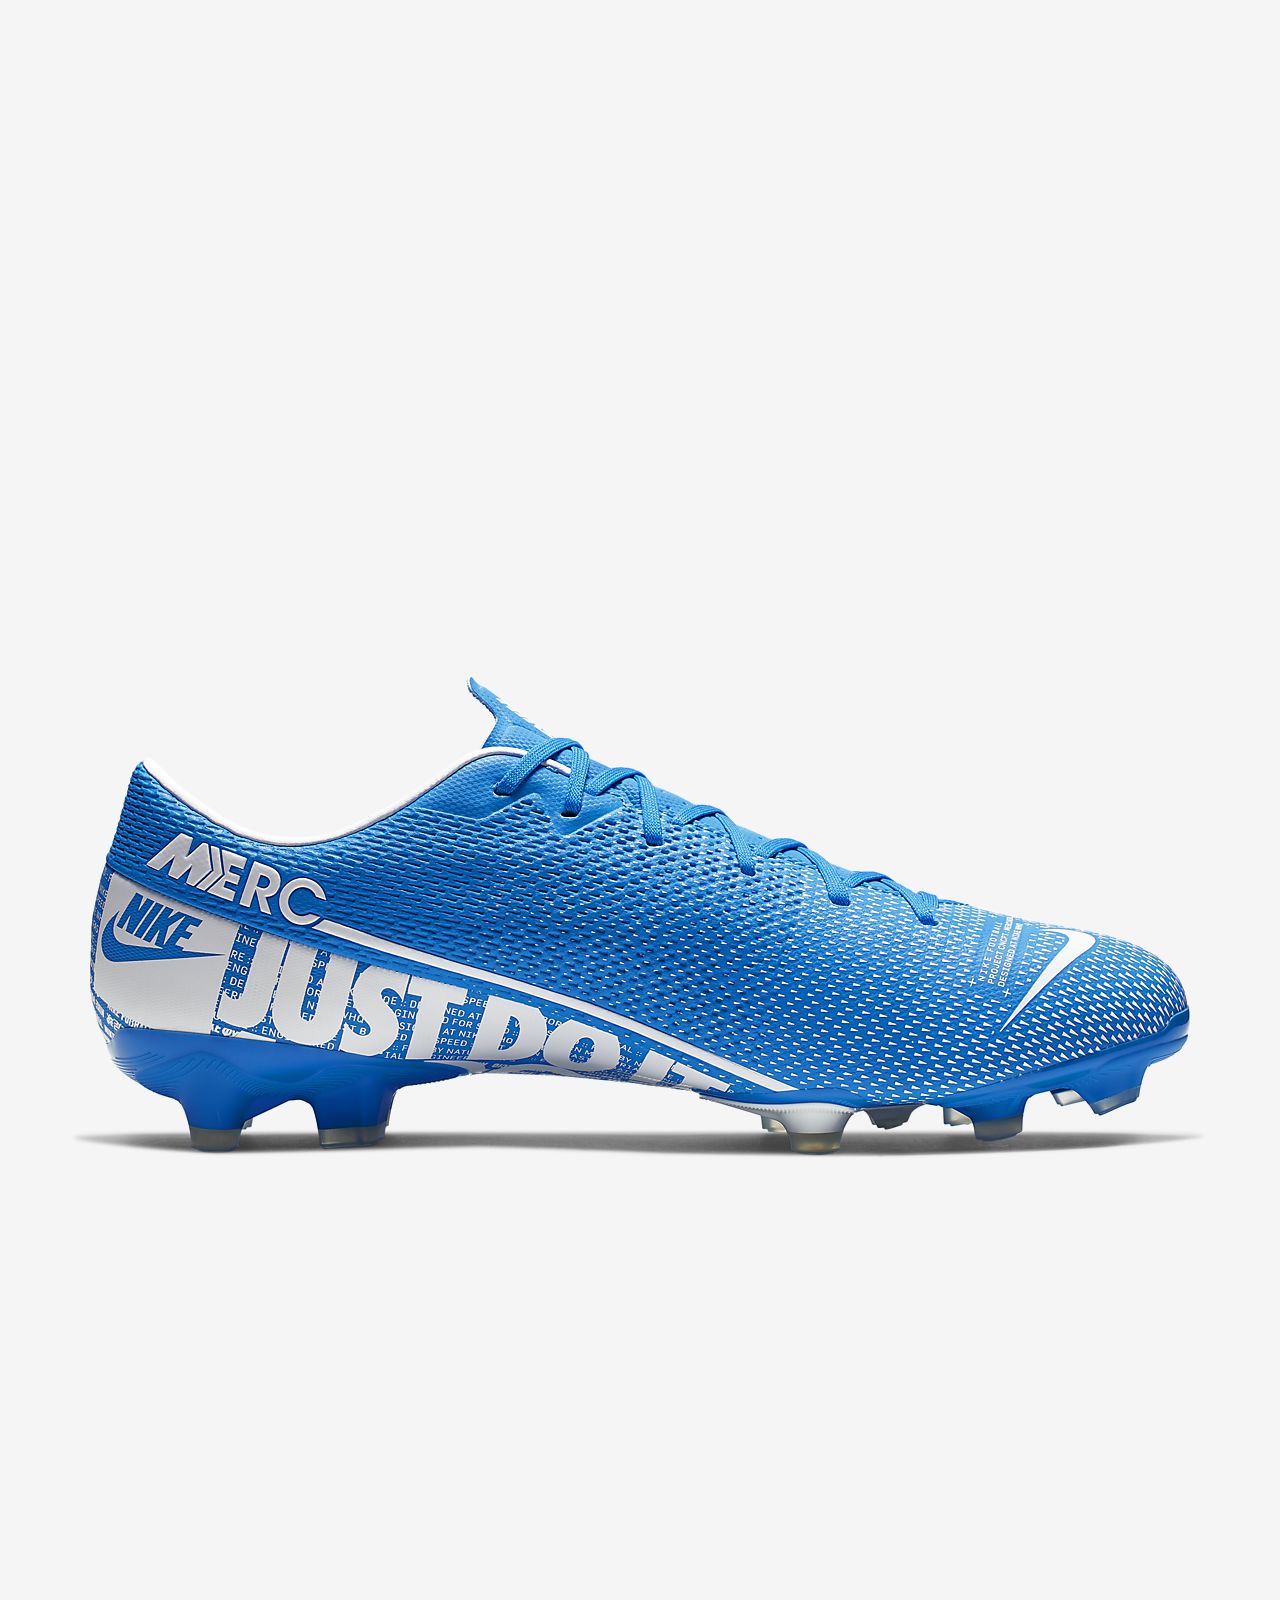 yupoo soccer boots royal blue orange nike mercurial vapor 10